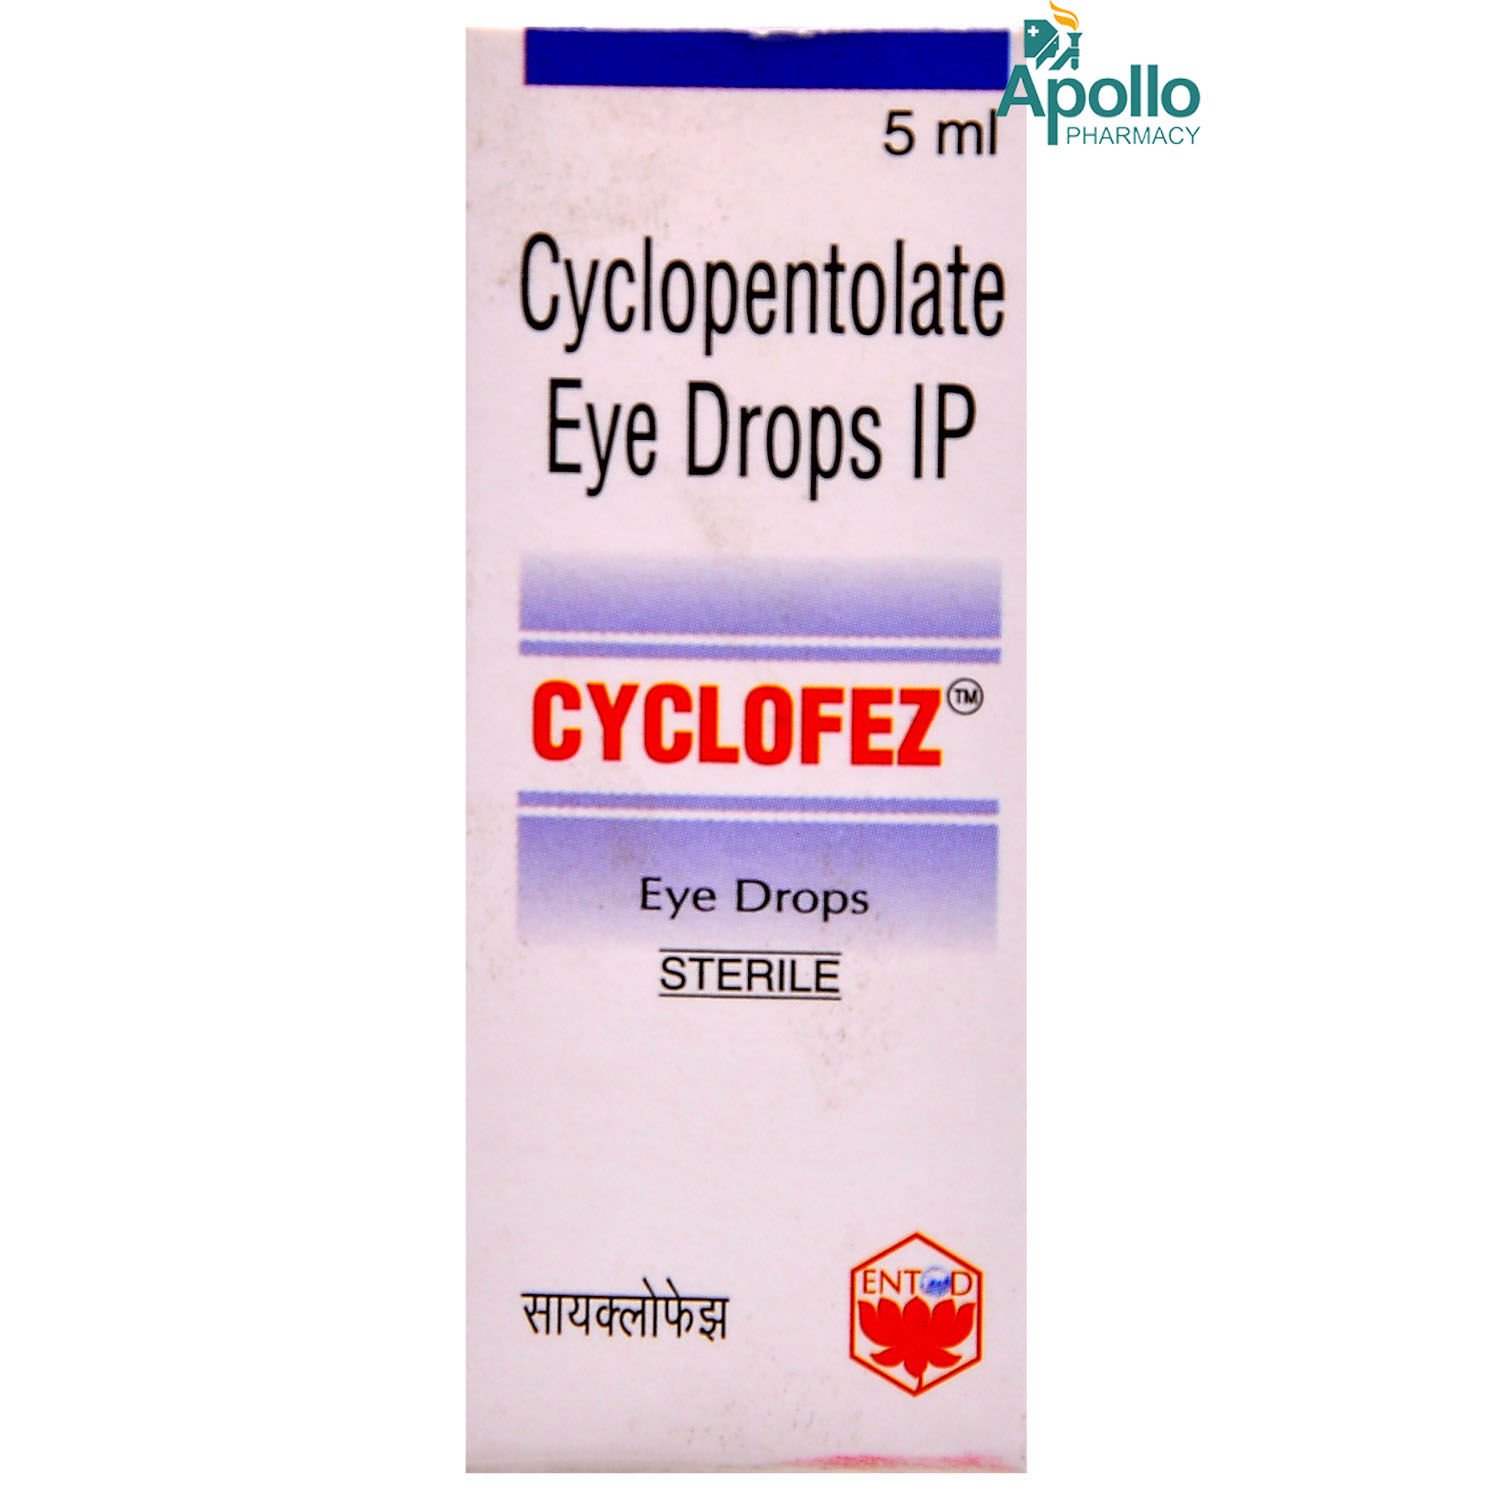 Buy Cyclofez Eye Drops 5 ml Online